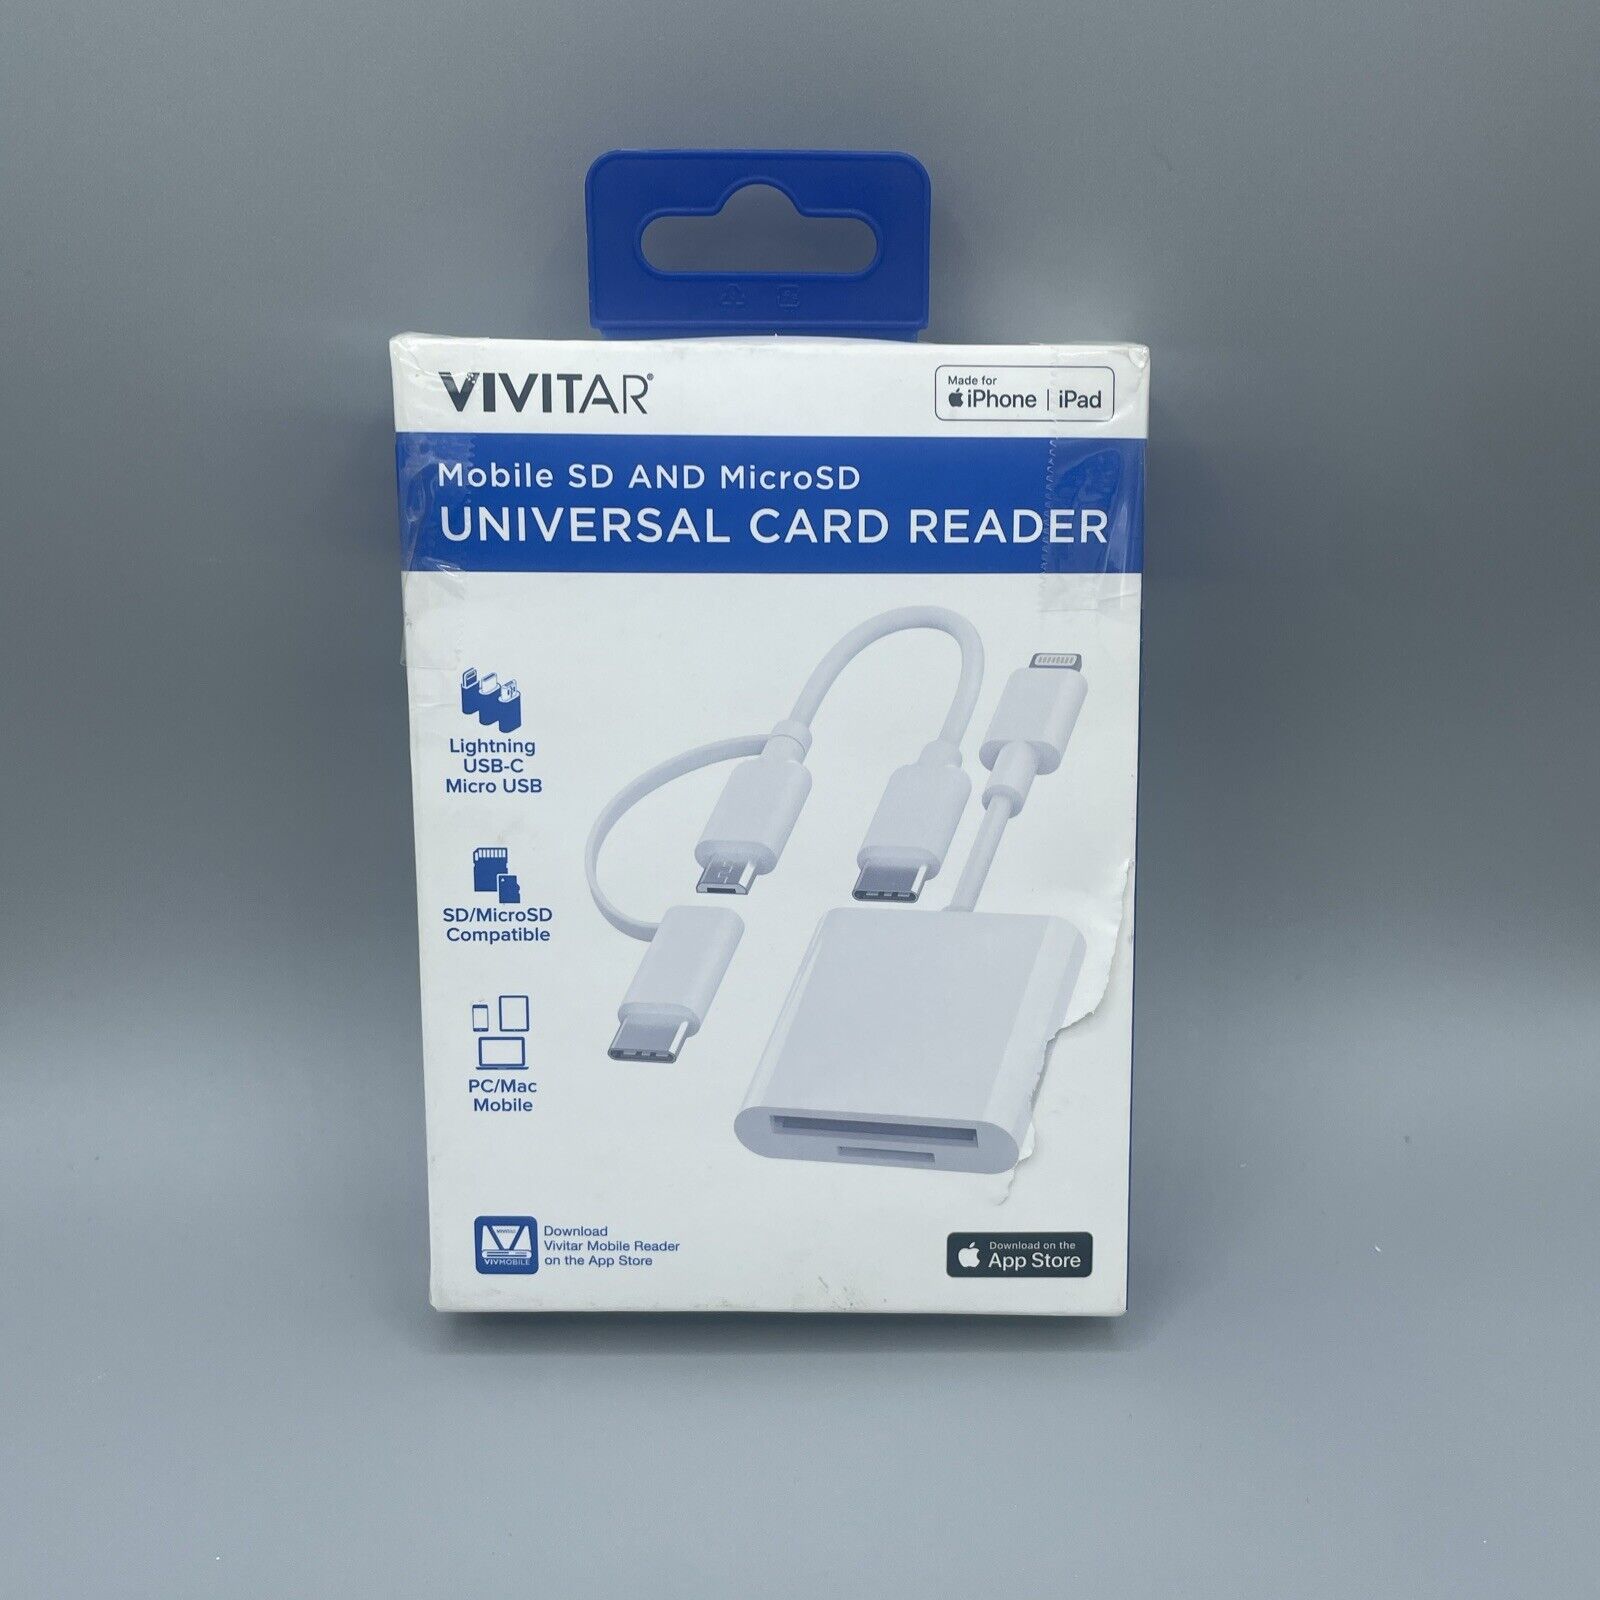 NEW/ Vivitar Mobile SD and MicroSD Universal Card Reader White MOV4016 V1